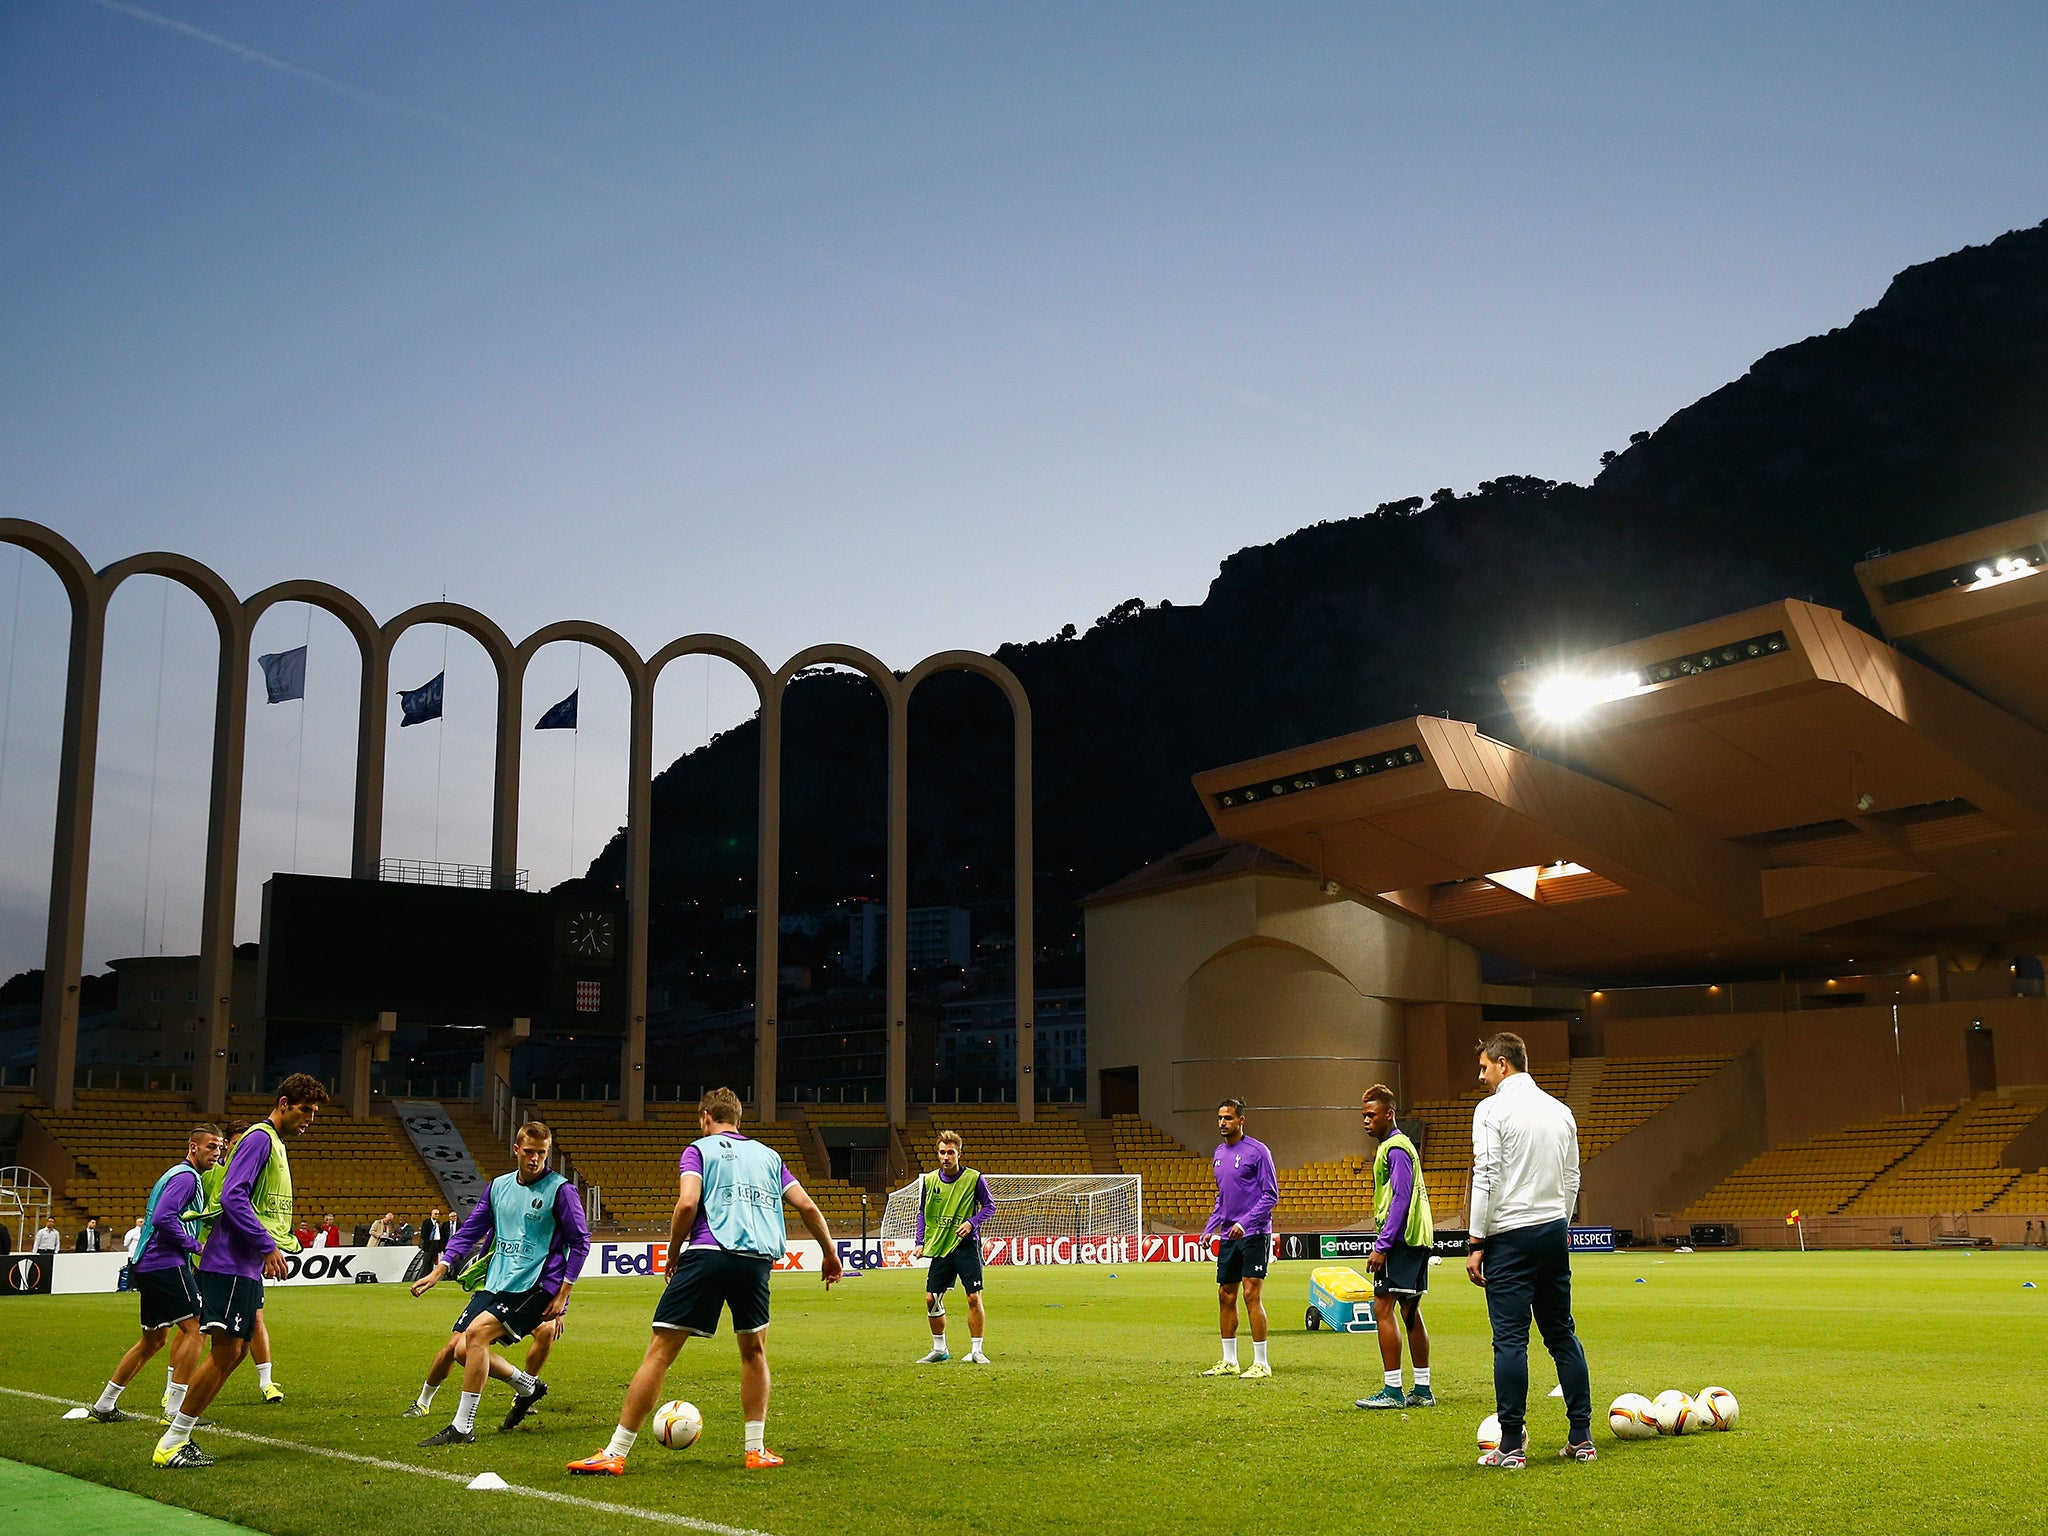 Pre-match training in the Stade Louis II, Monaco's iconic stadium